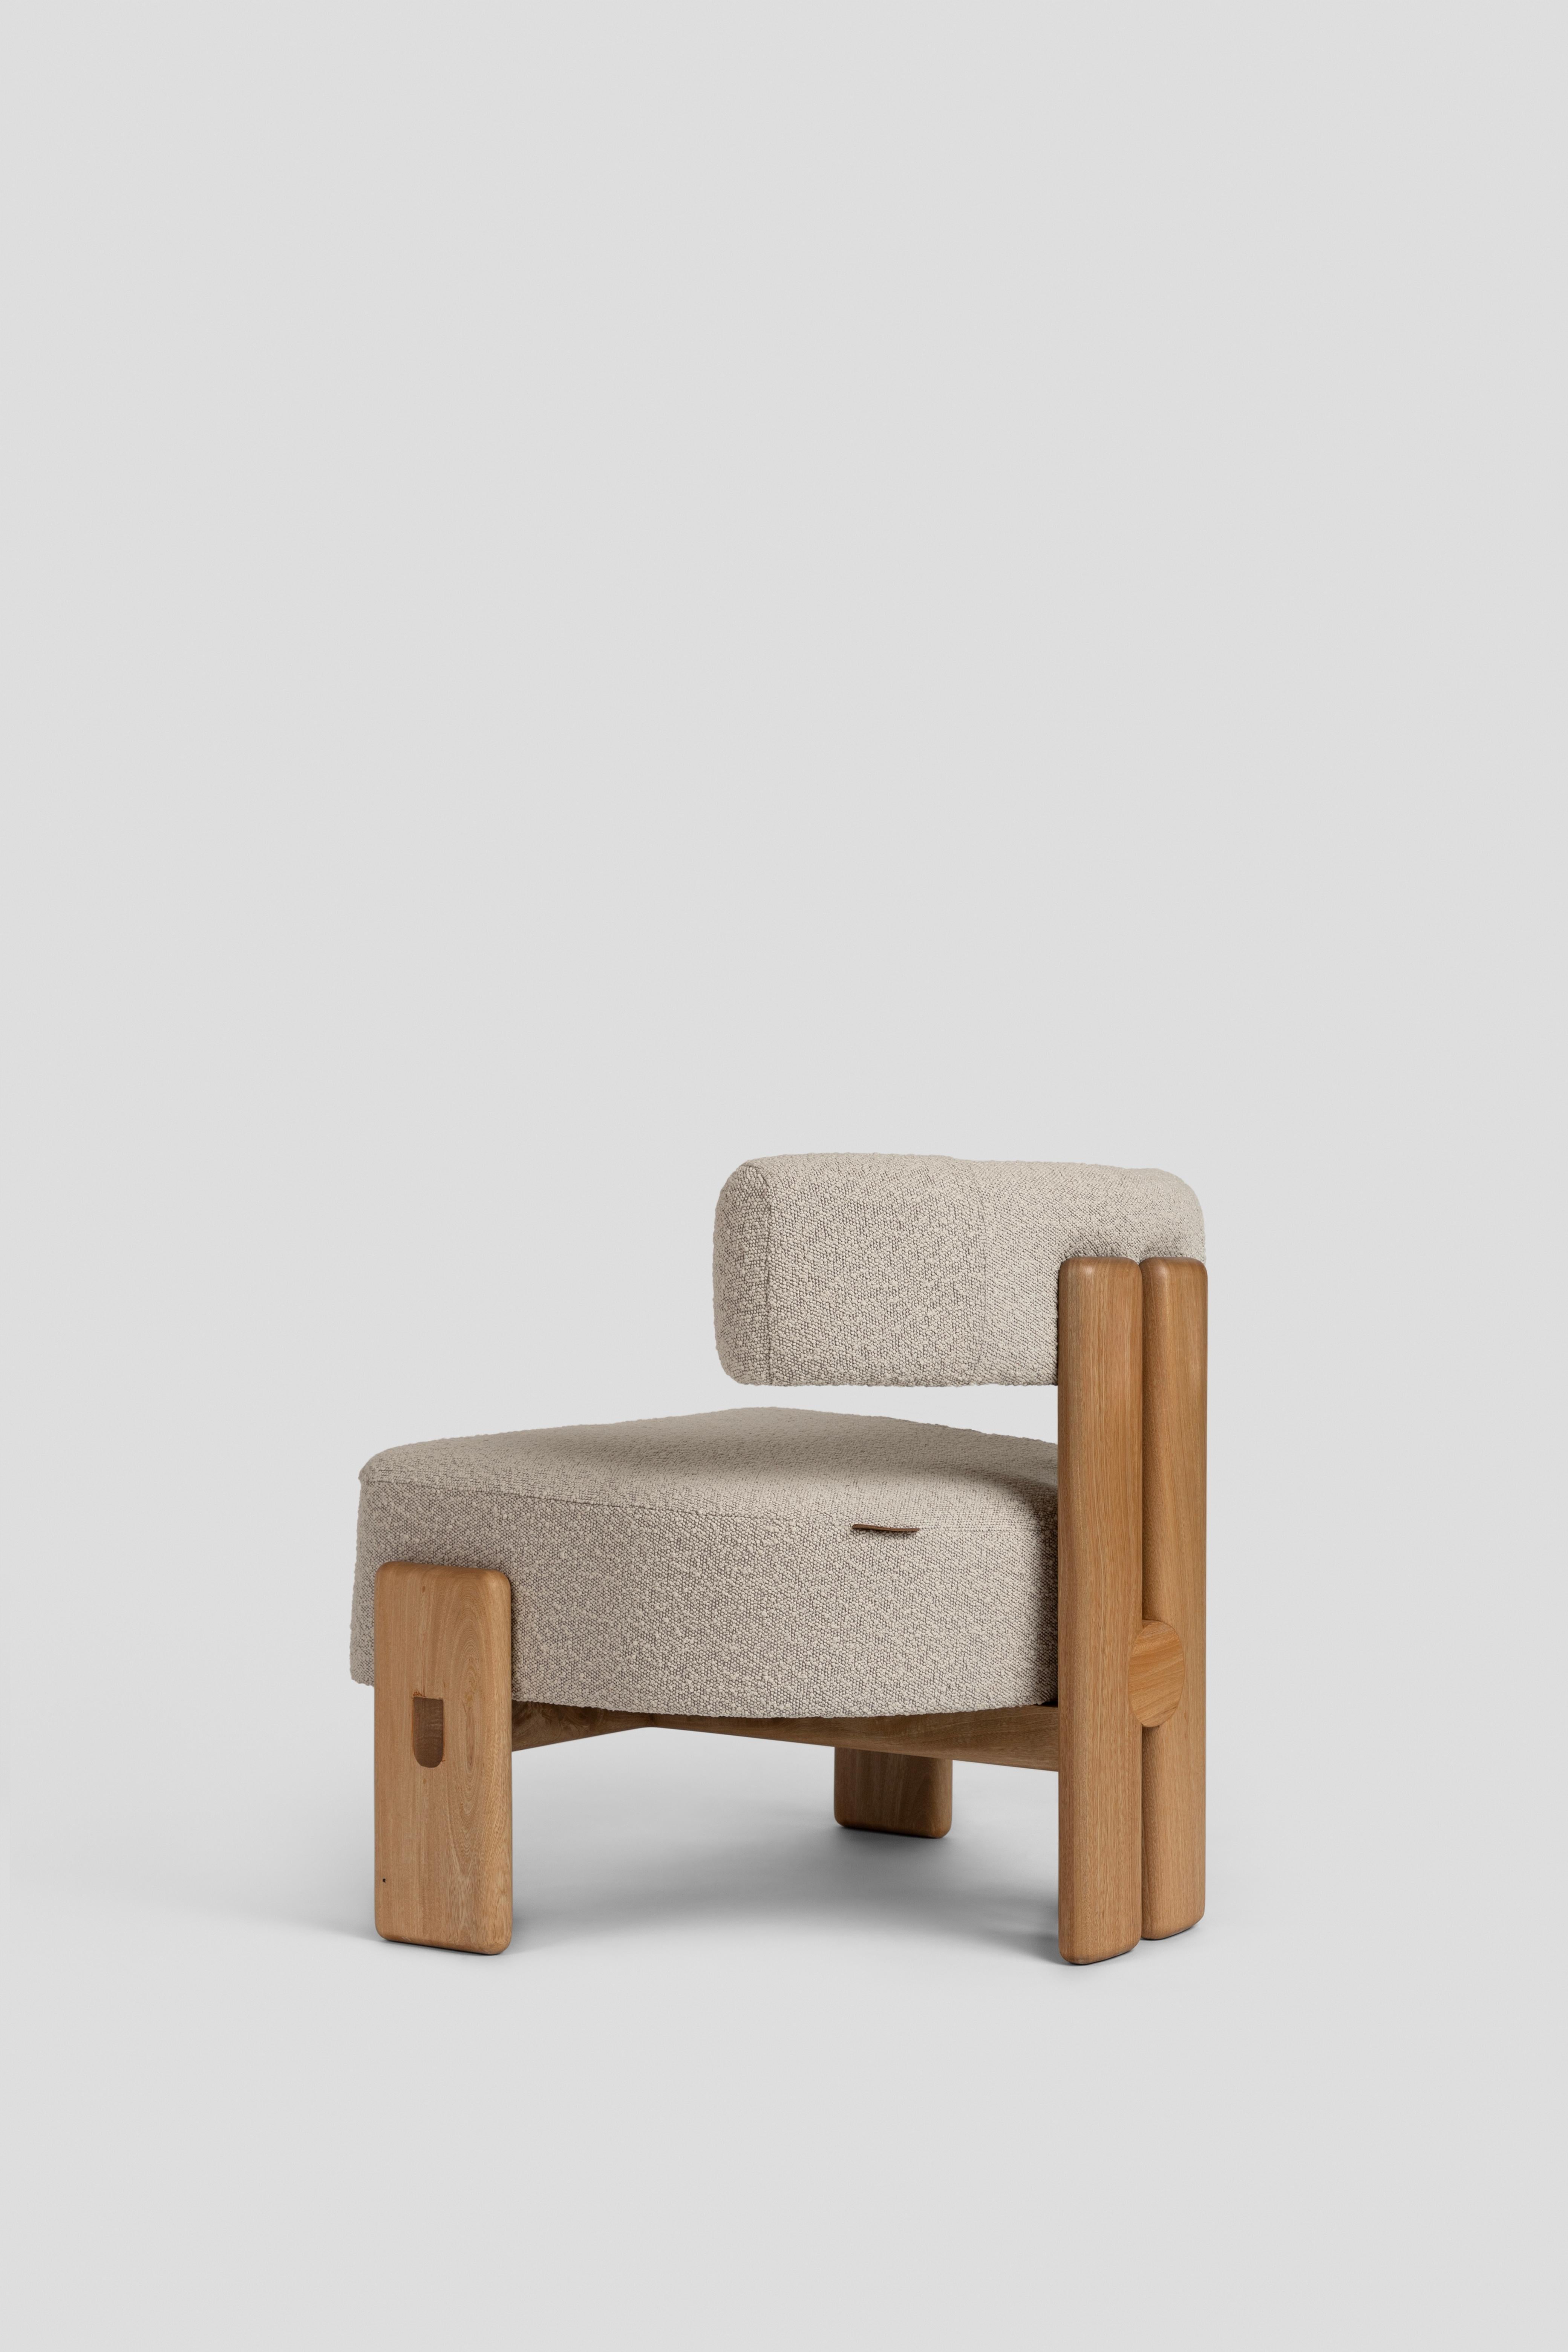 De la Paz Low Chair Massivholz, Contemporary Mexican Design (Handgefertigt) im Angebot